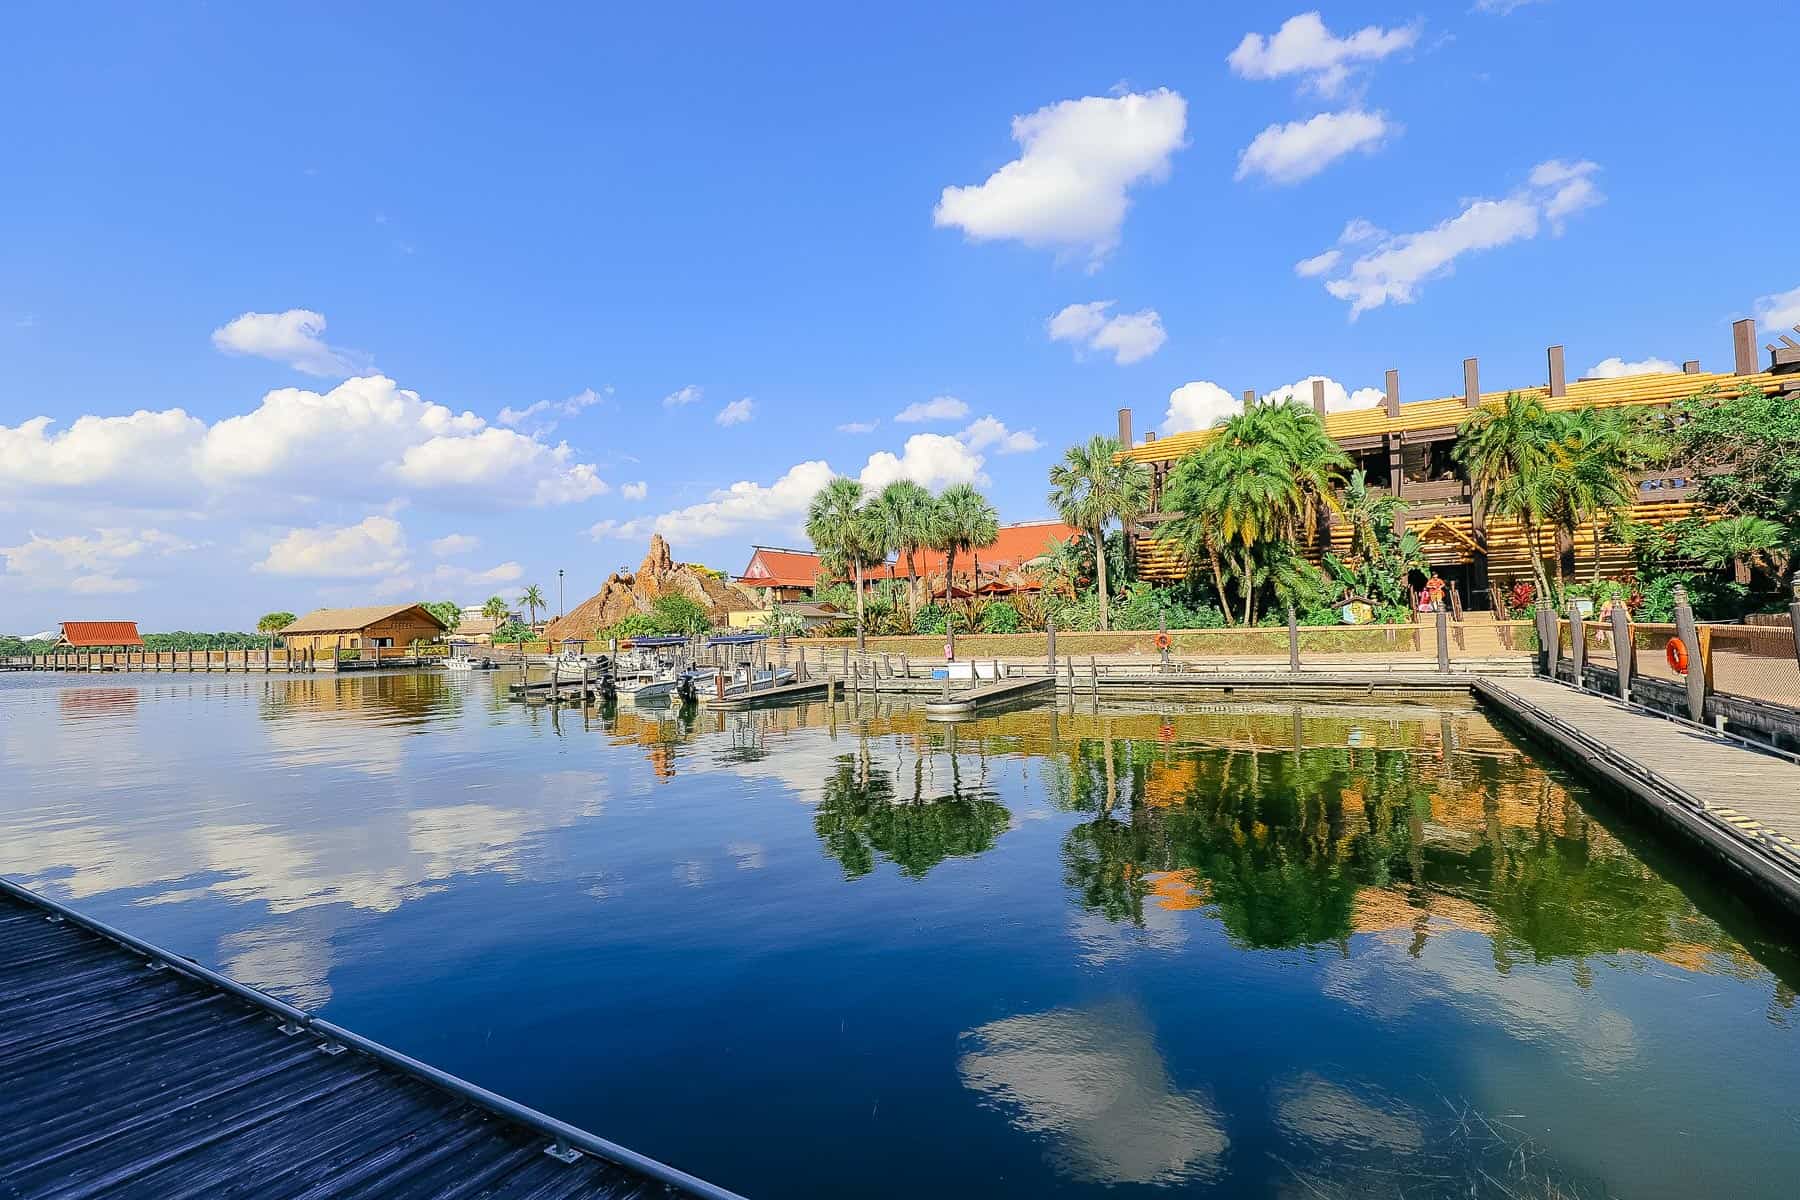 the boat marina at Disney's Polynesian Village Resort 